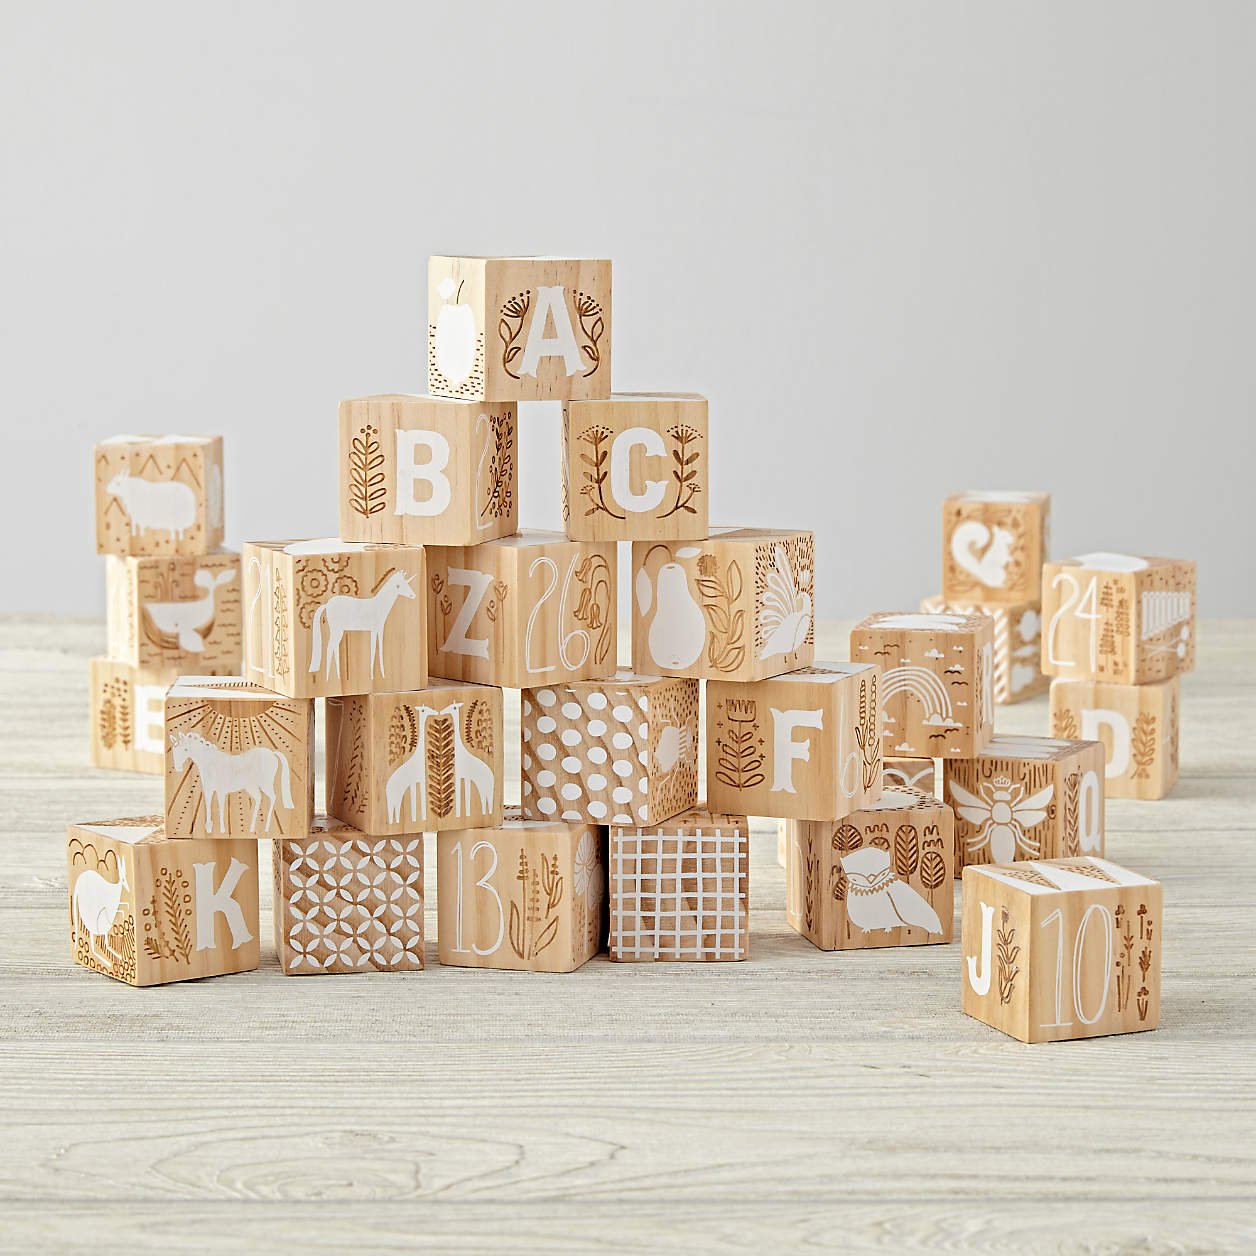 etched-wooden-blocks.jpeg